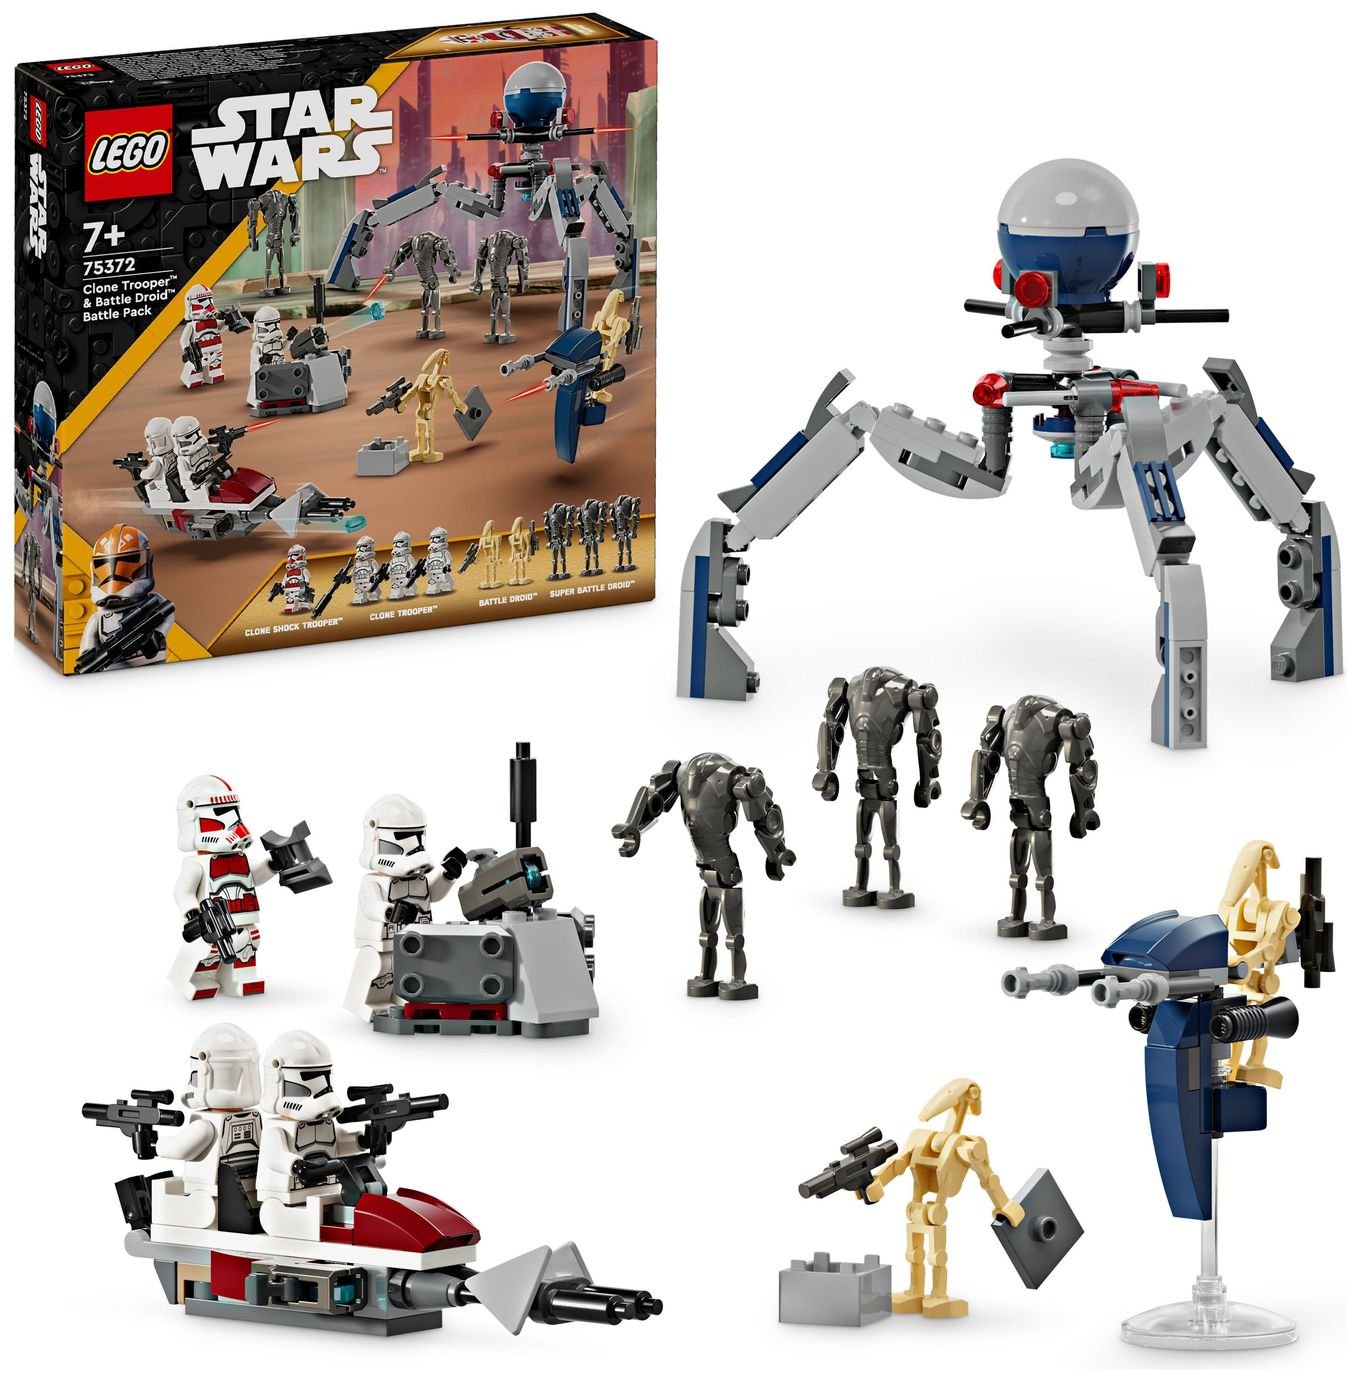 LEGO Star Wars Clone Trooper & Battle Droid Pack 75372